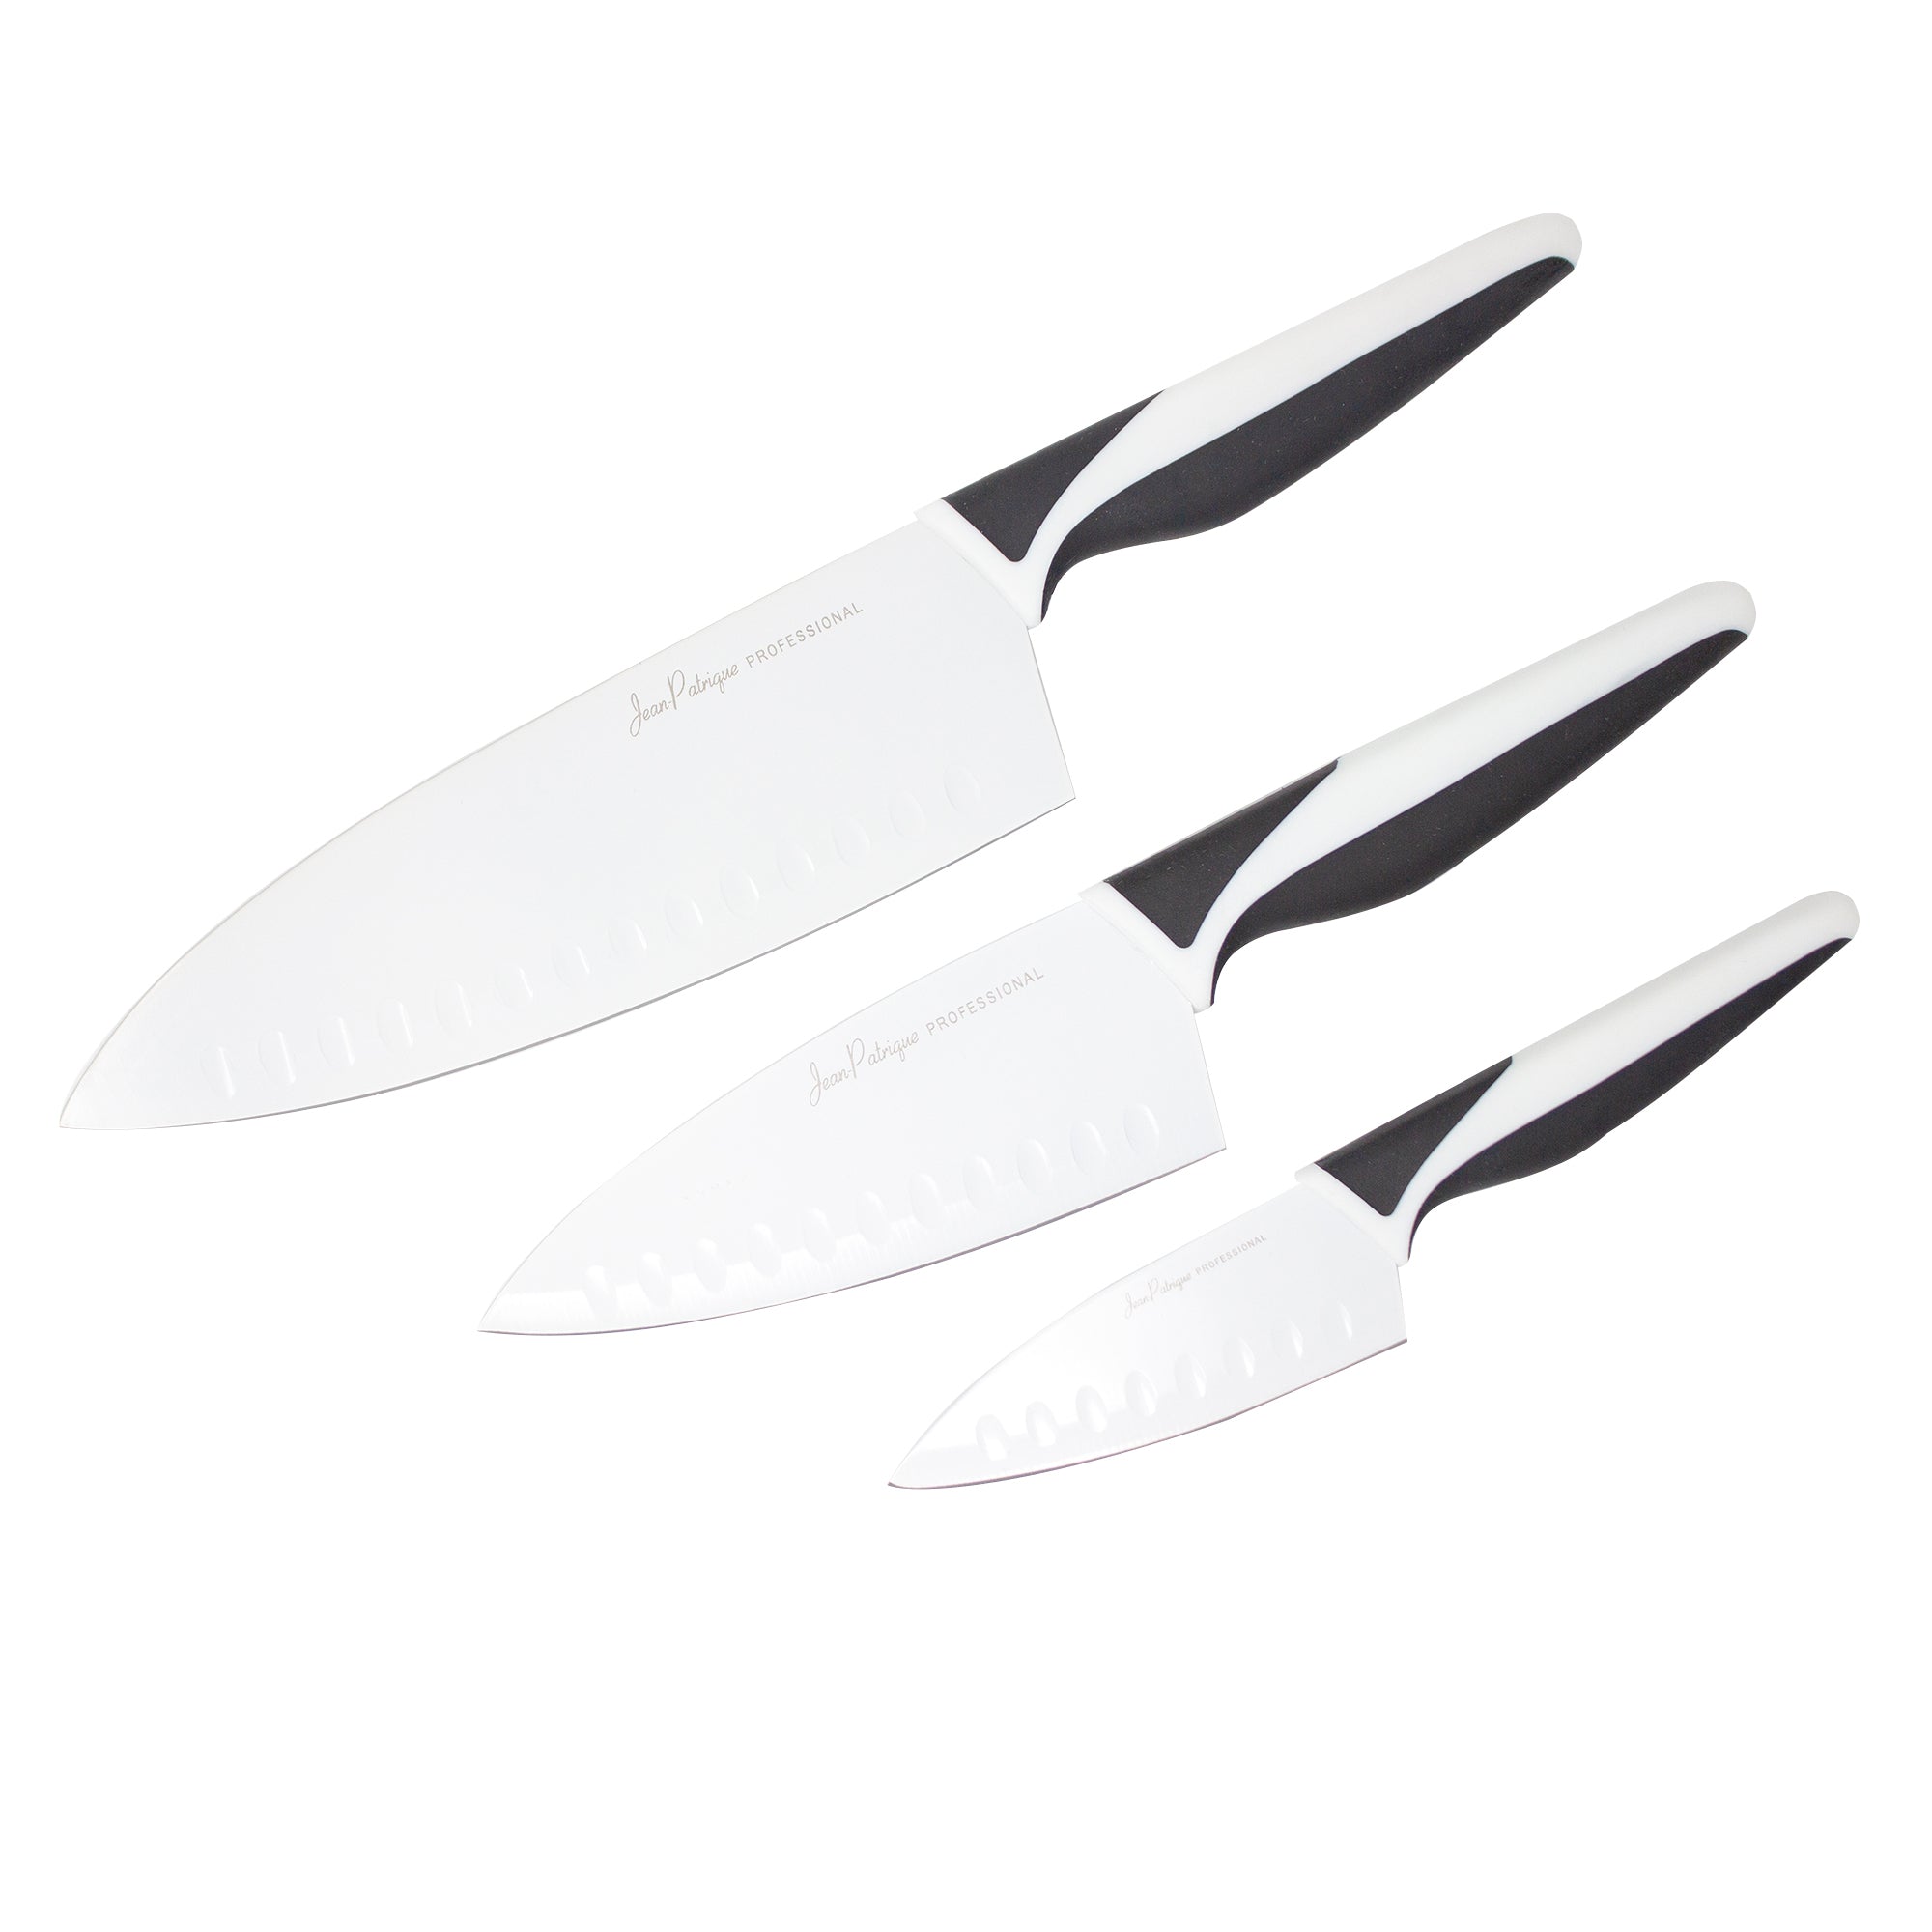 Chopaholic Essential Kitchen Knives - Set of 5, Jean Patrique Professional  Cookware